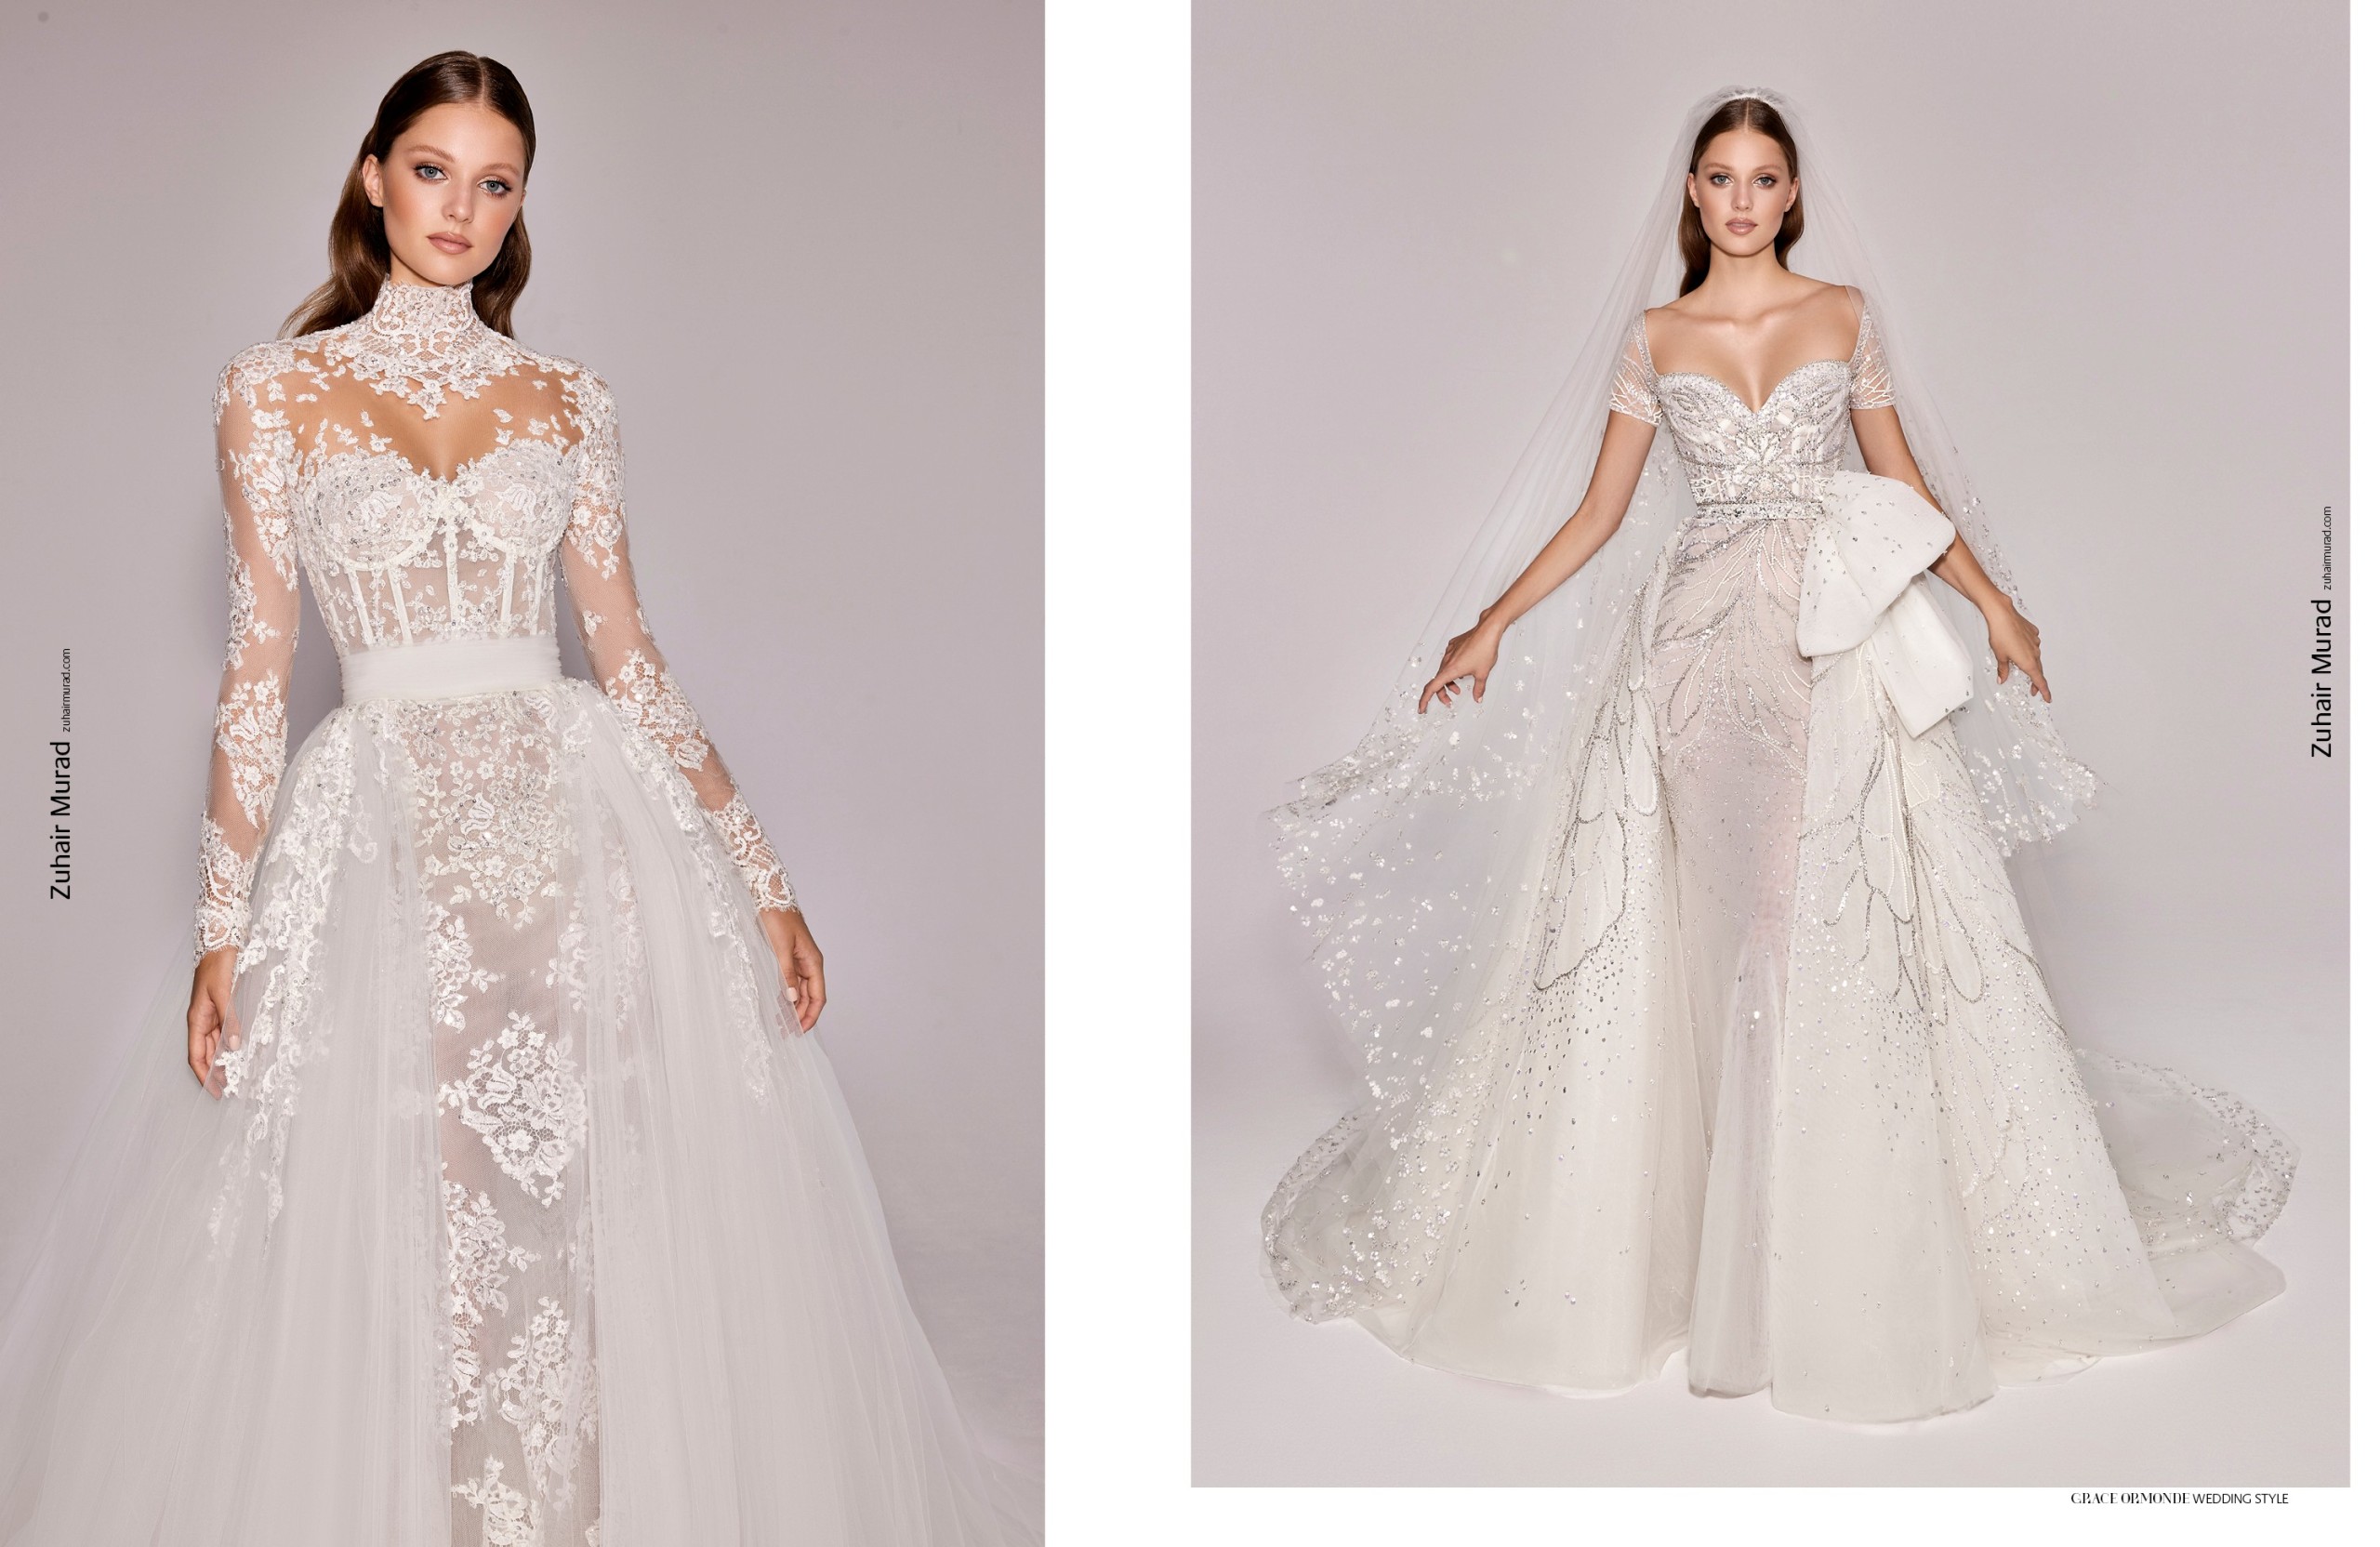 Best Turkish Wedding Dress Designers - Shippn Blog